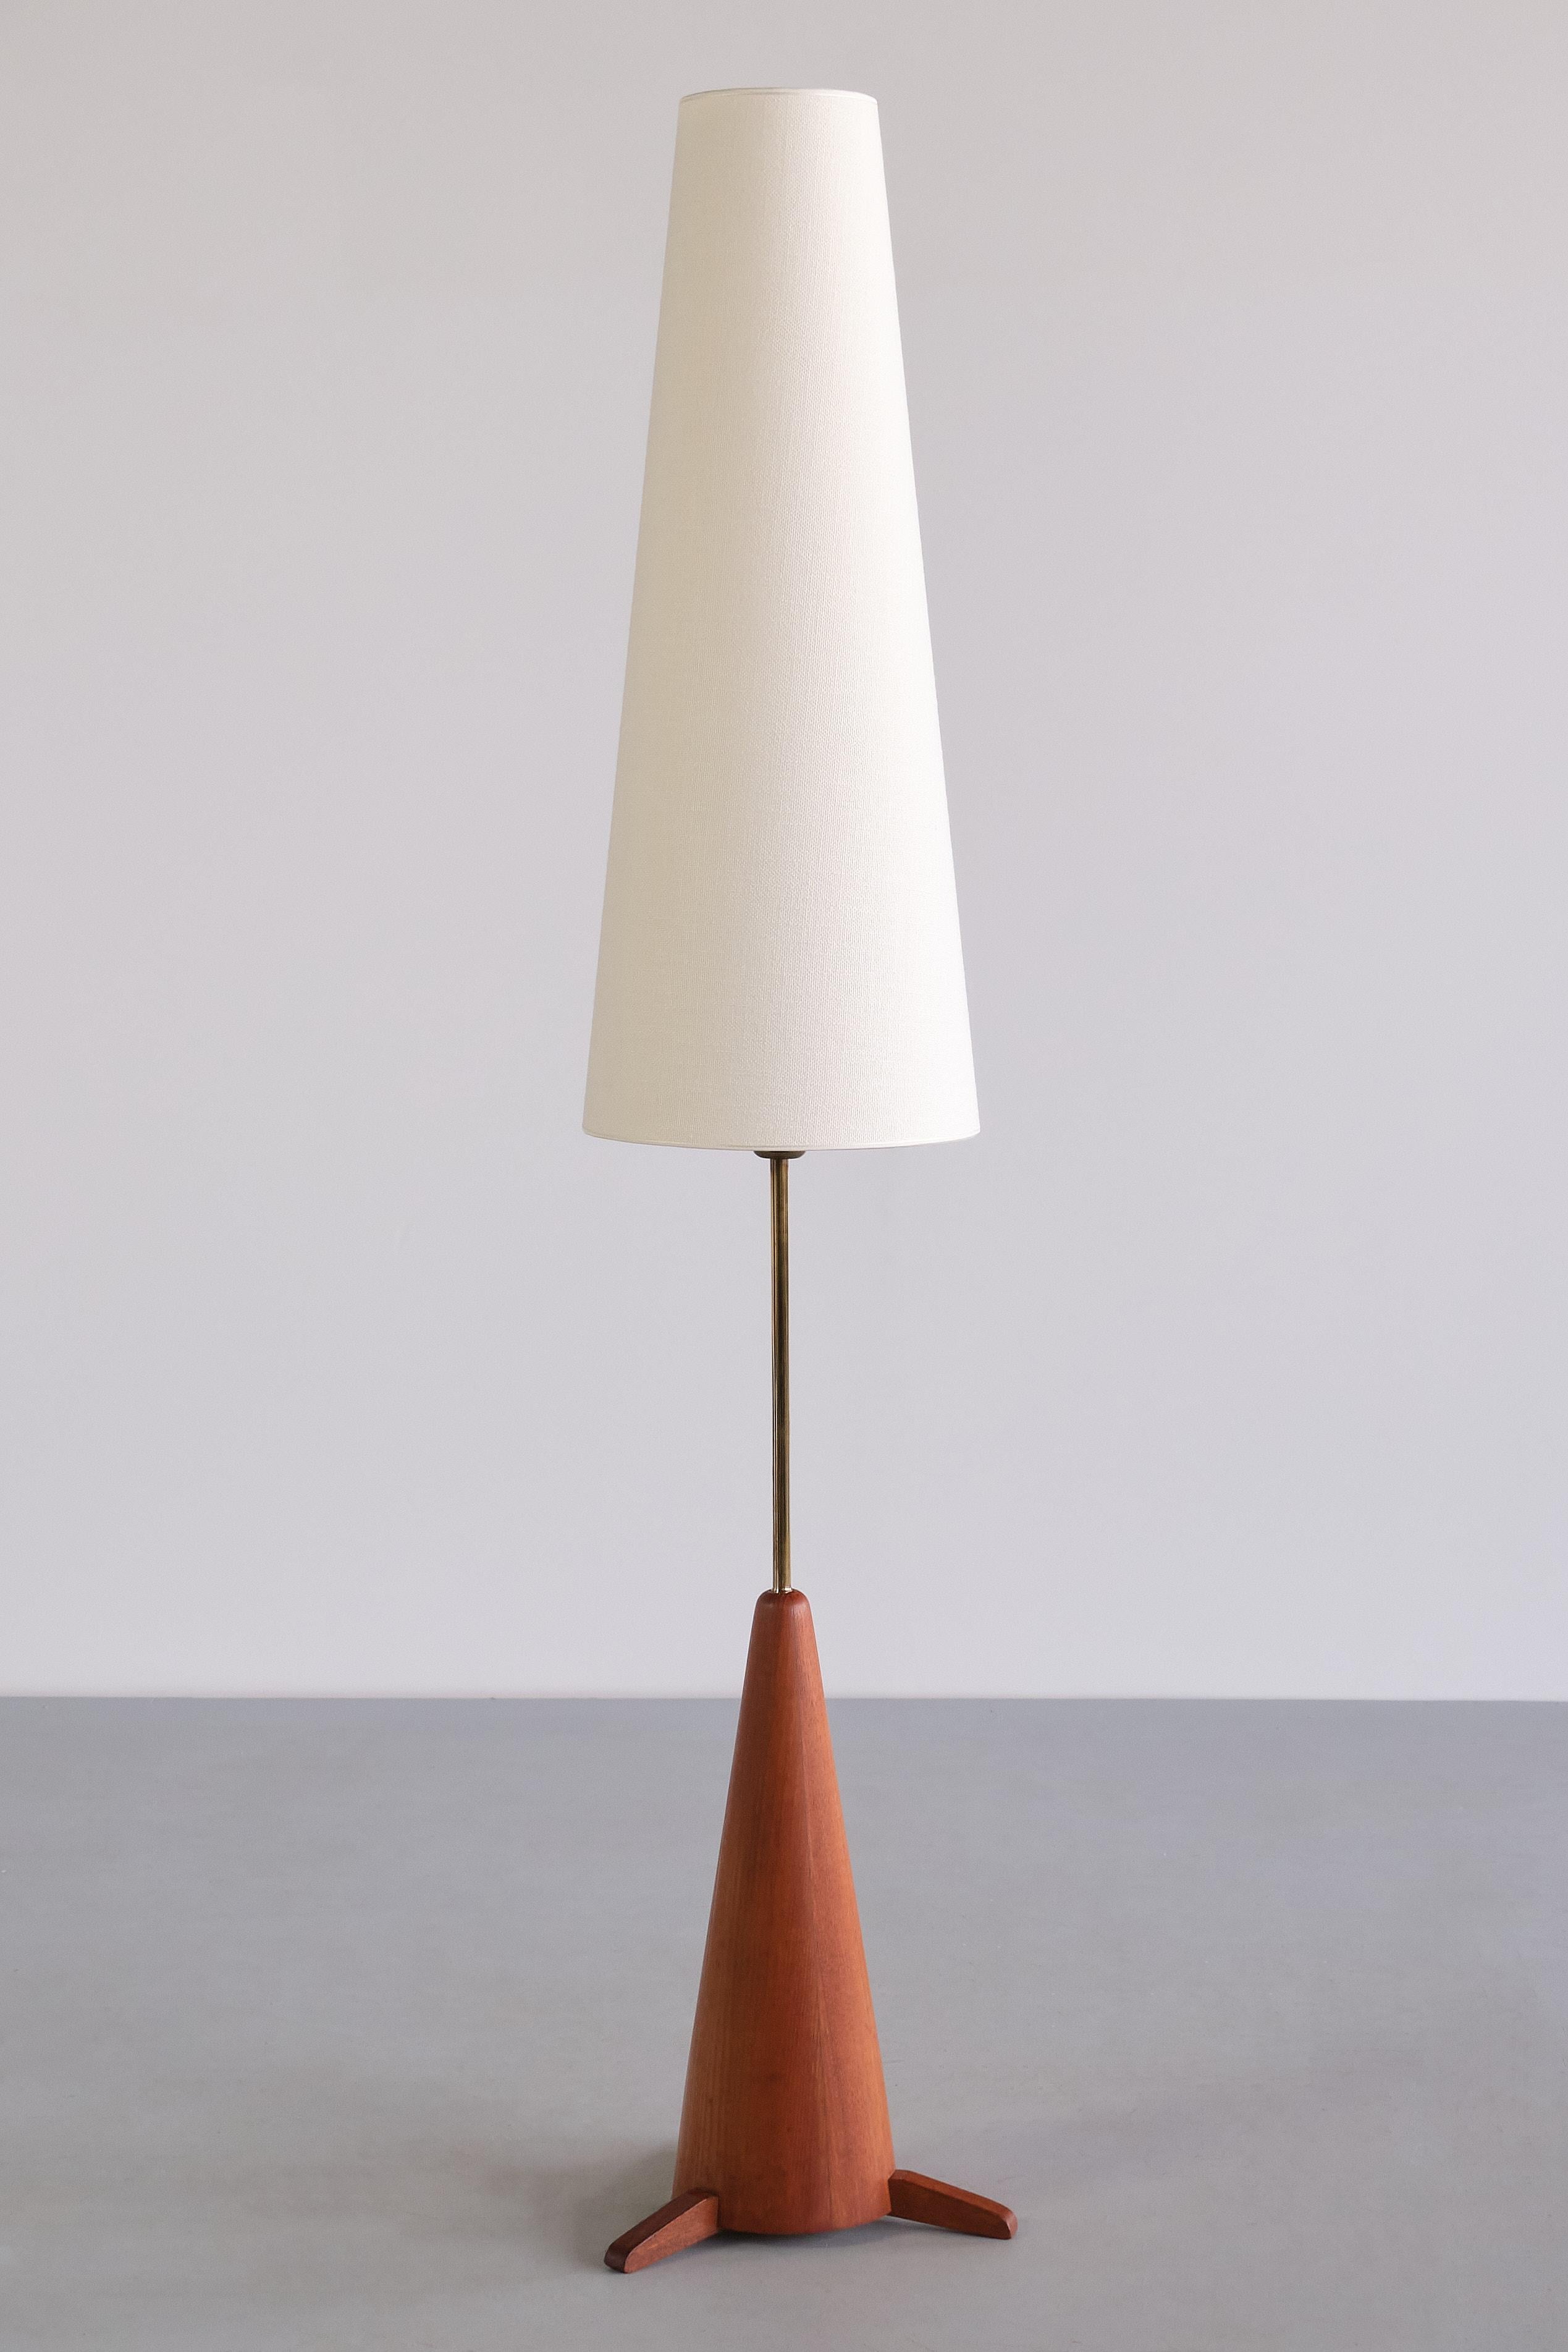 Möllers Armaturfabrik Eskiltuna Floor Lamp in Teak and Brass, Sweden, 1950s For Sale 5